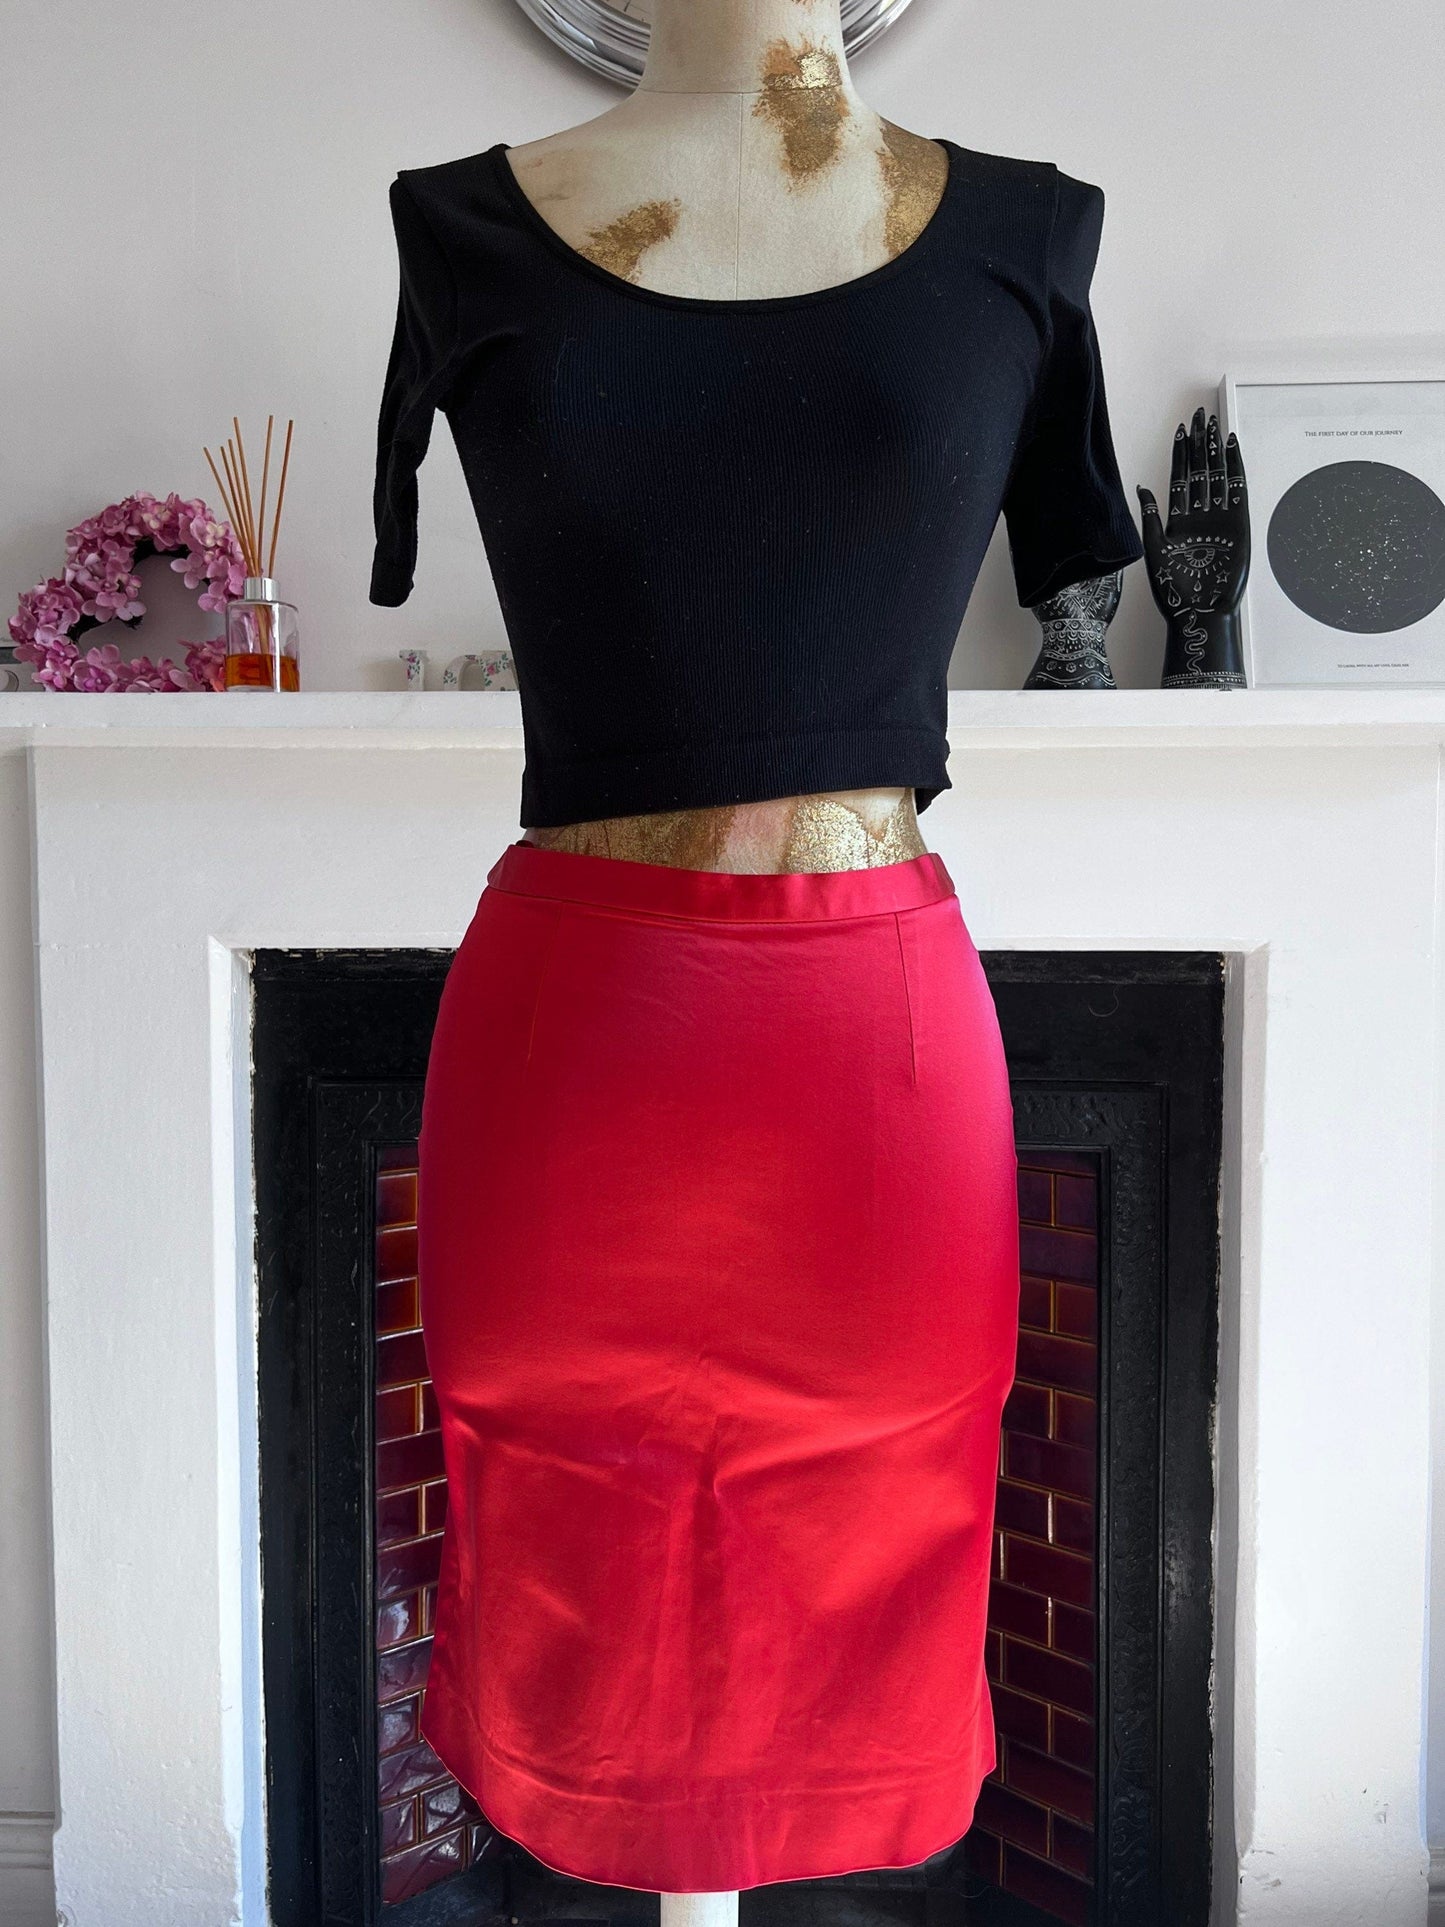 Vintage Red satin Whistles pencil Skirt UK size 8-10 -  scarlet red Stretch Satin Evening Skirt